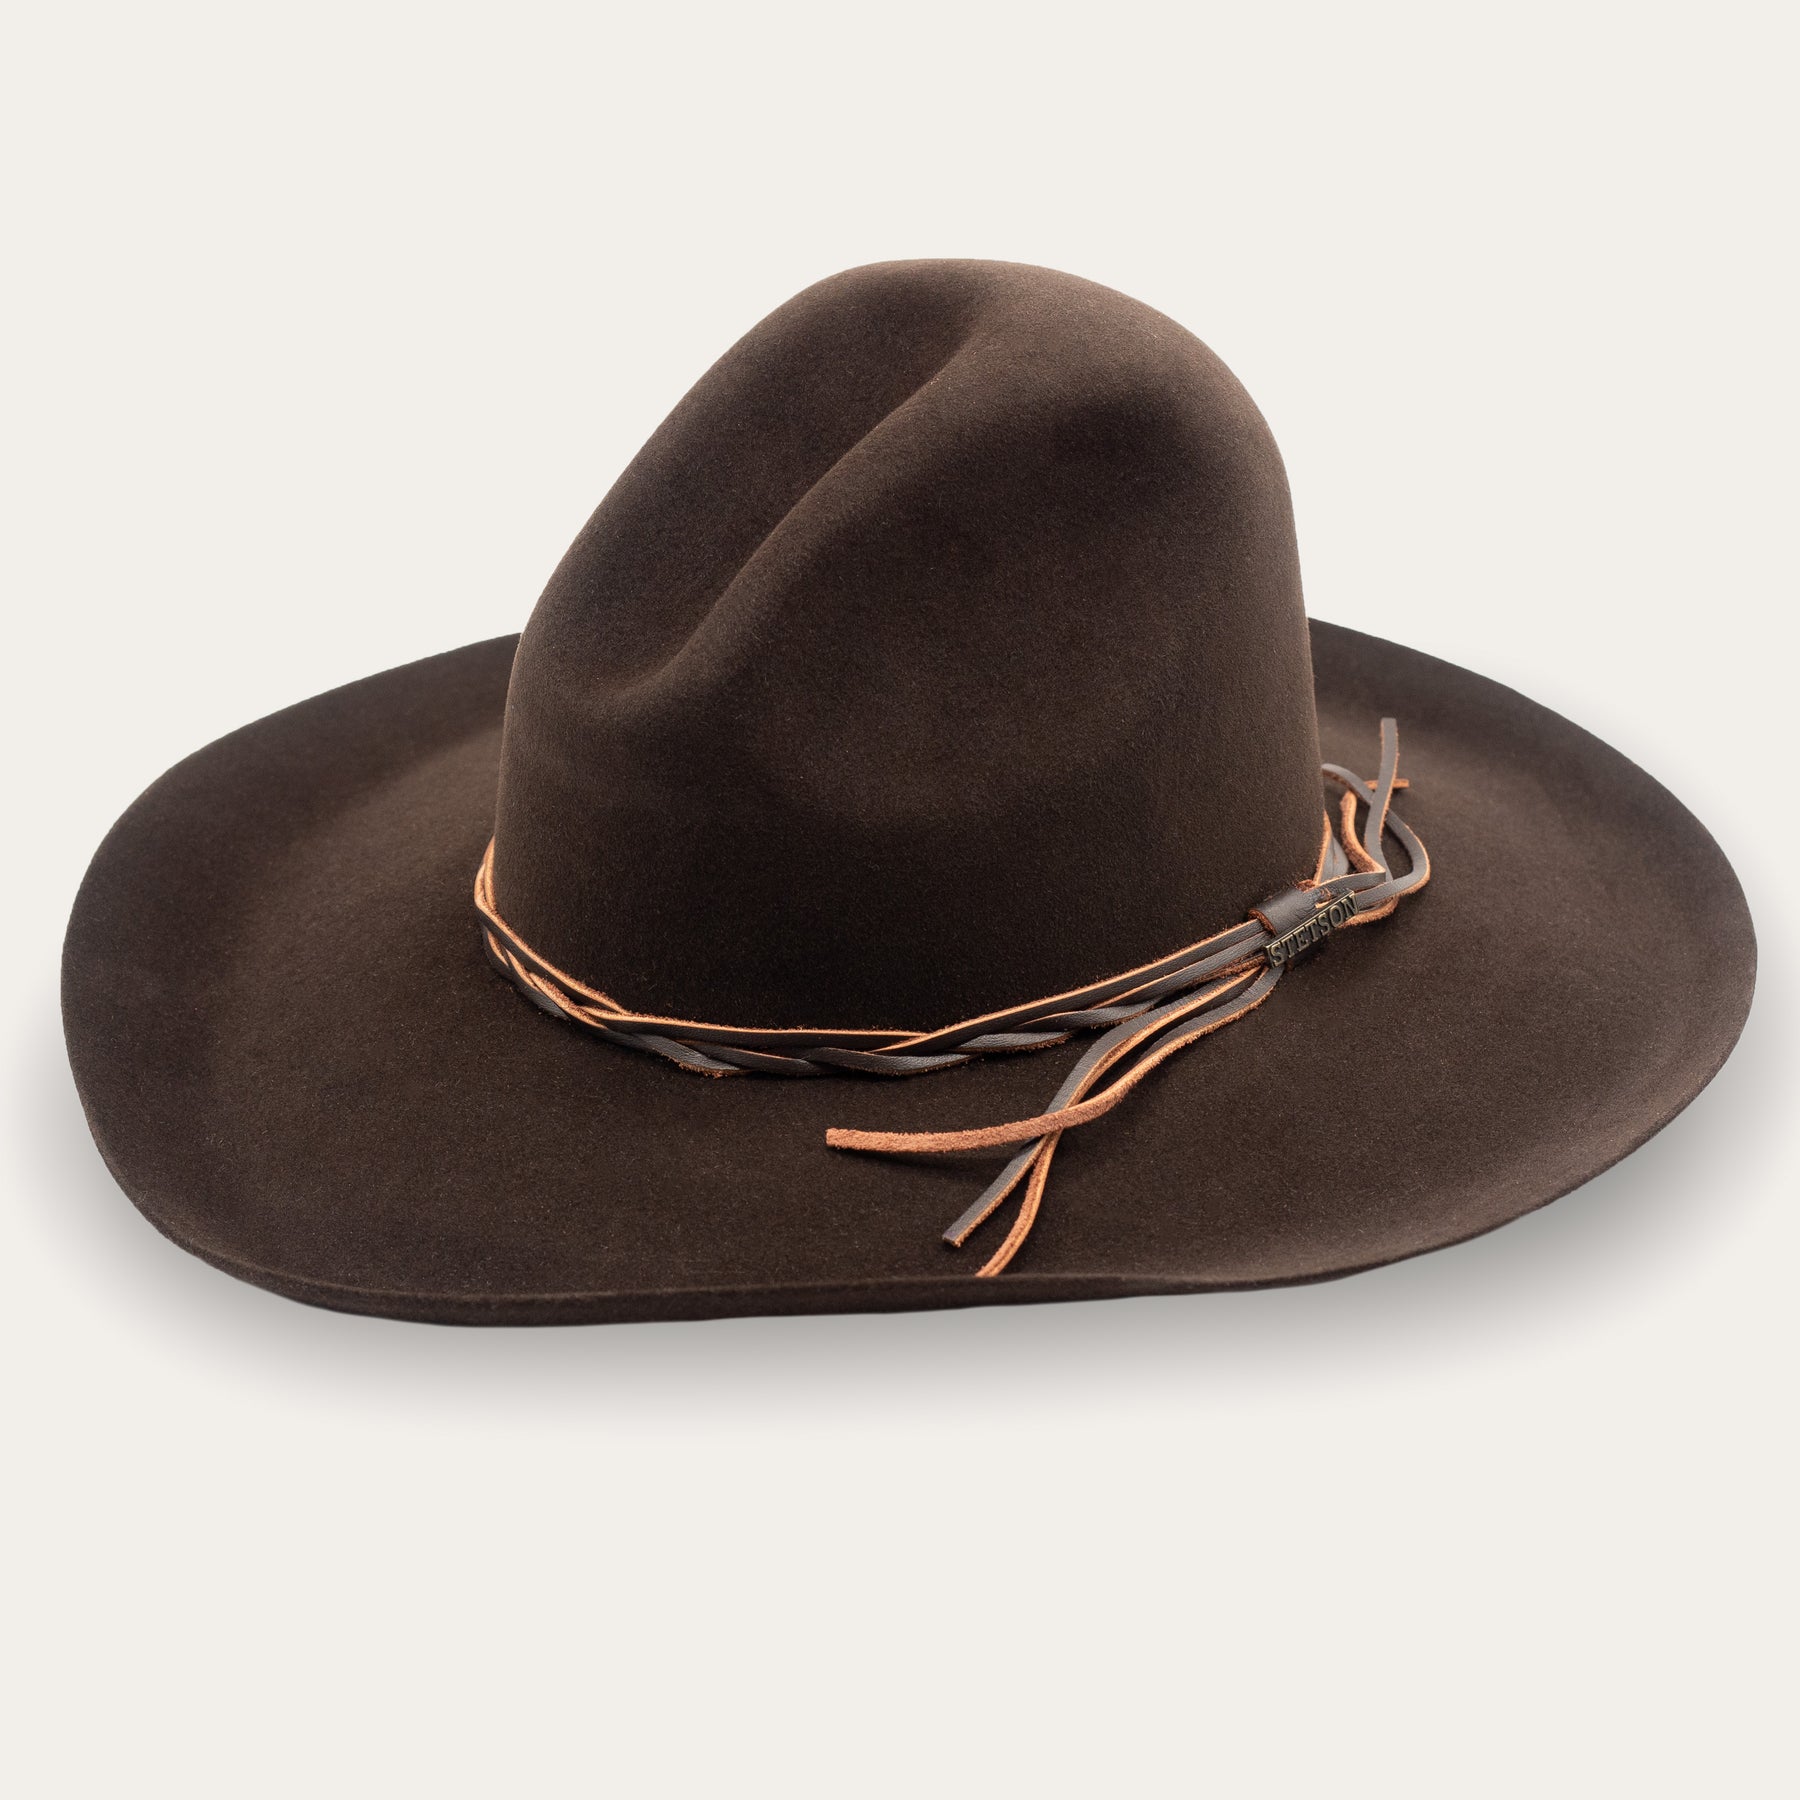 Stetson Hats Australia | Legendary hand-crafted hats – Stetson Australia